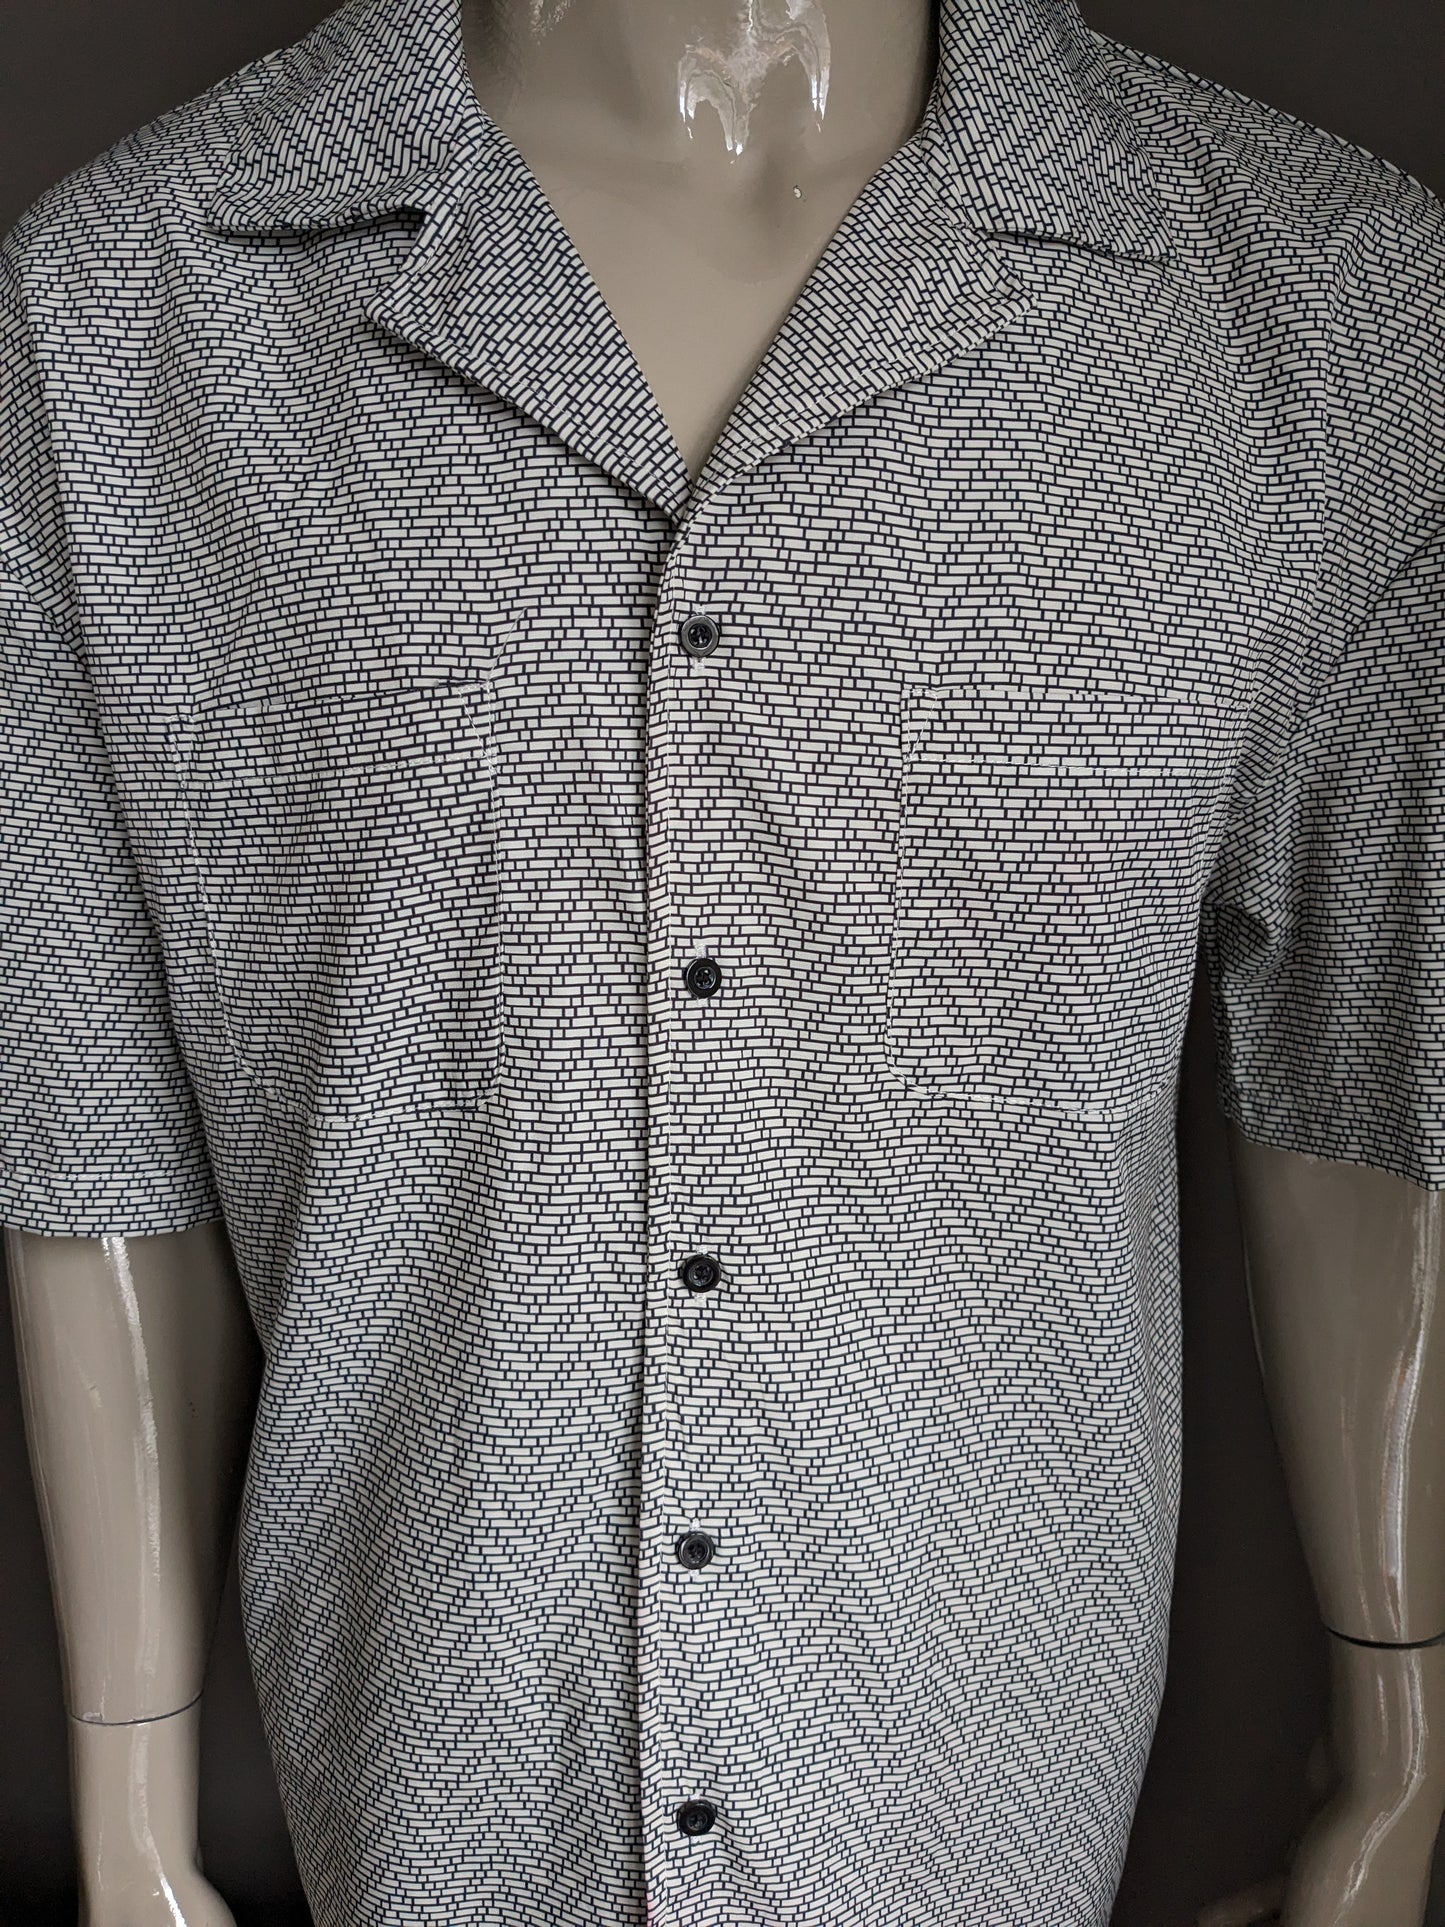 Vintage shirt short sleeve. Black and white print. Size L.